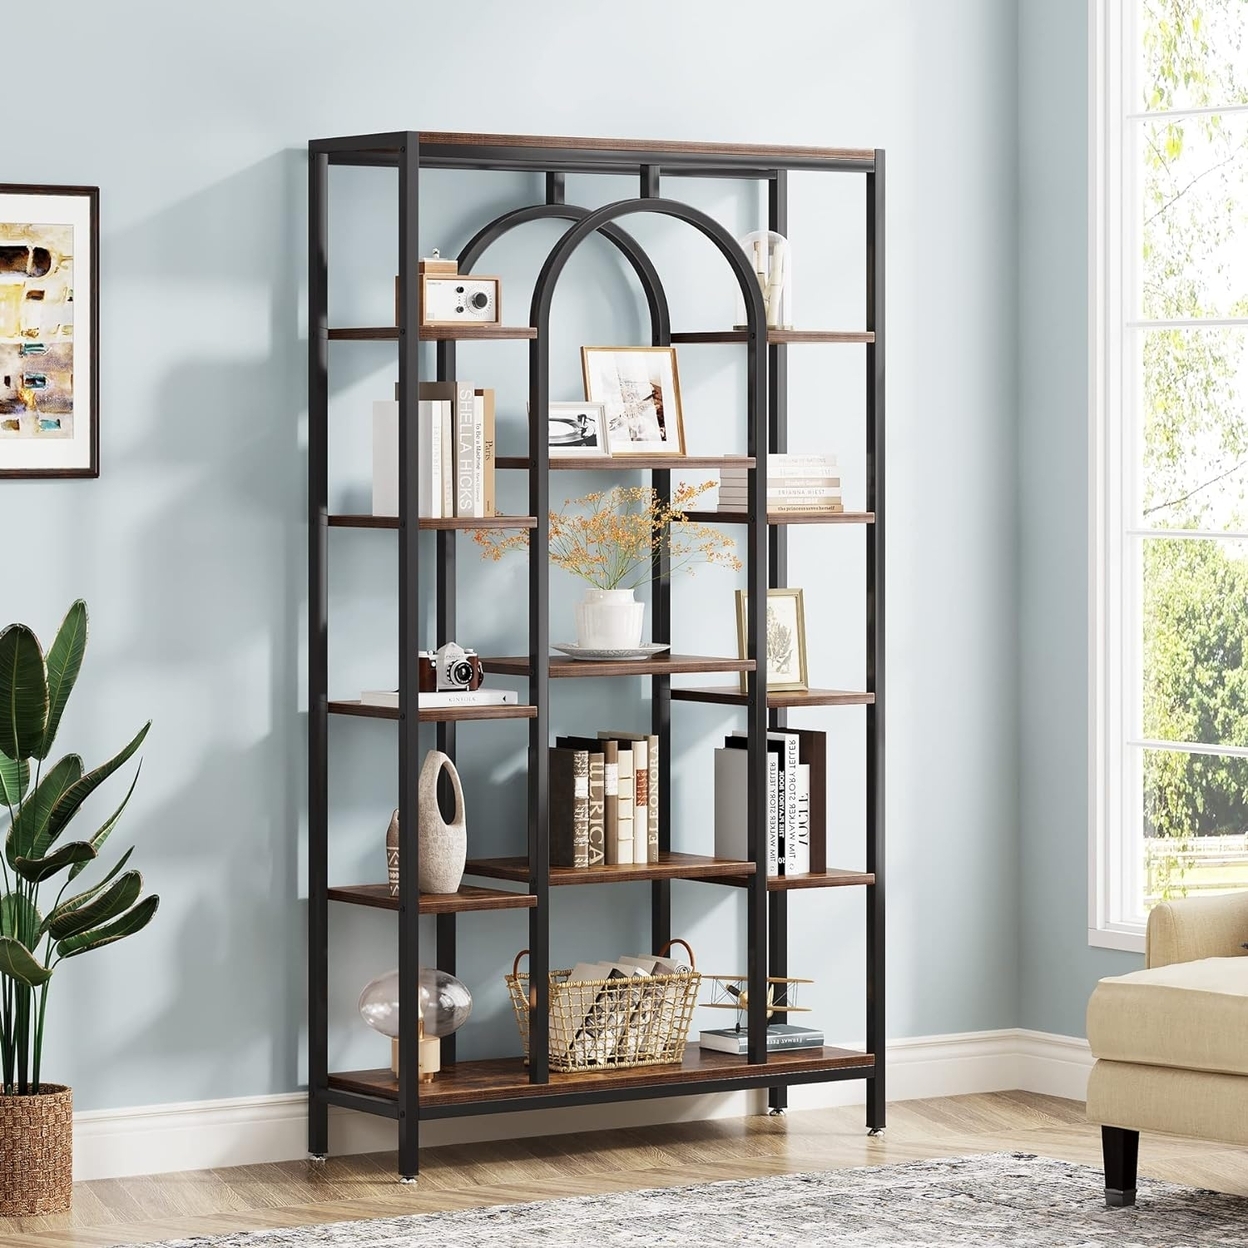 Tribesigns 5-Tier Bookshelf, Industrial Tall Bookcase Book Shelf Organizer Freestanding Open Display Shelves - Rustic Brown